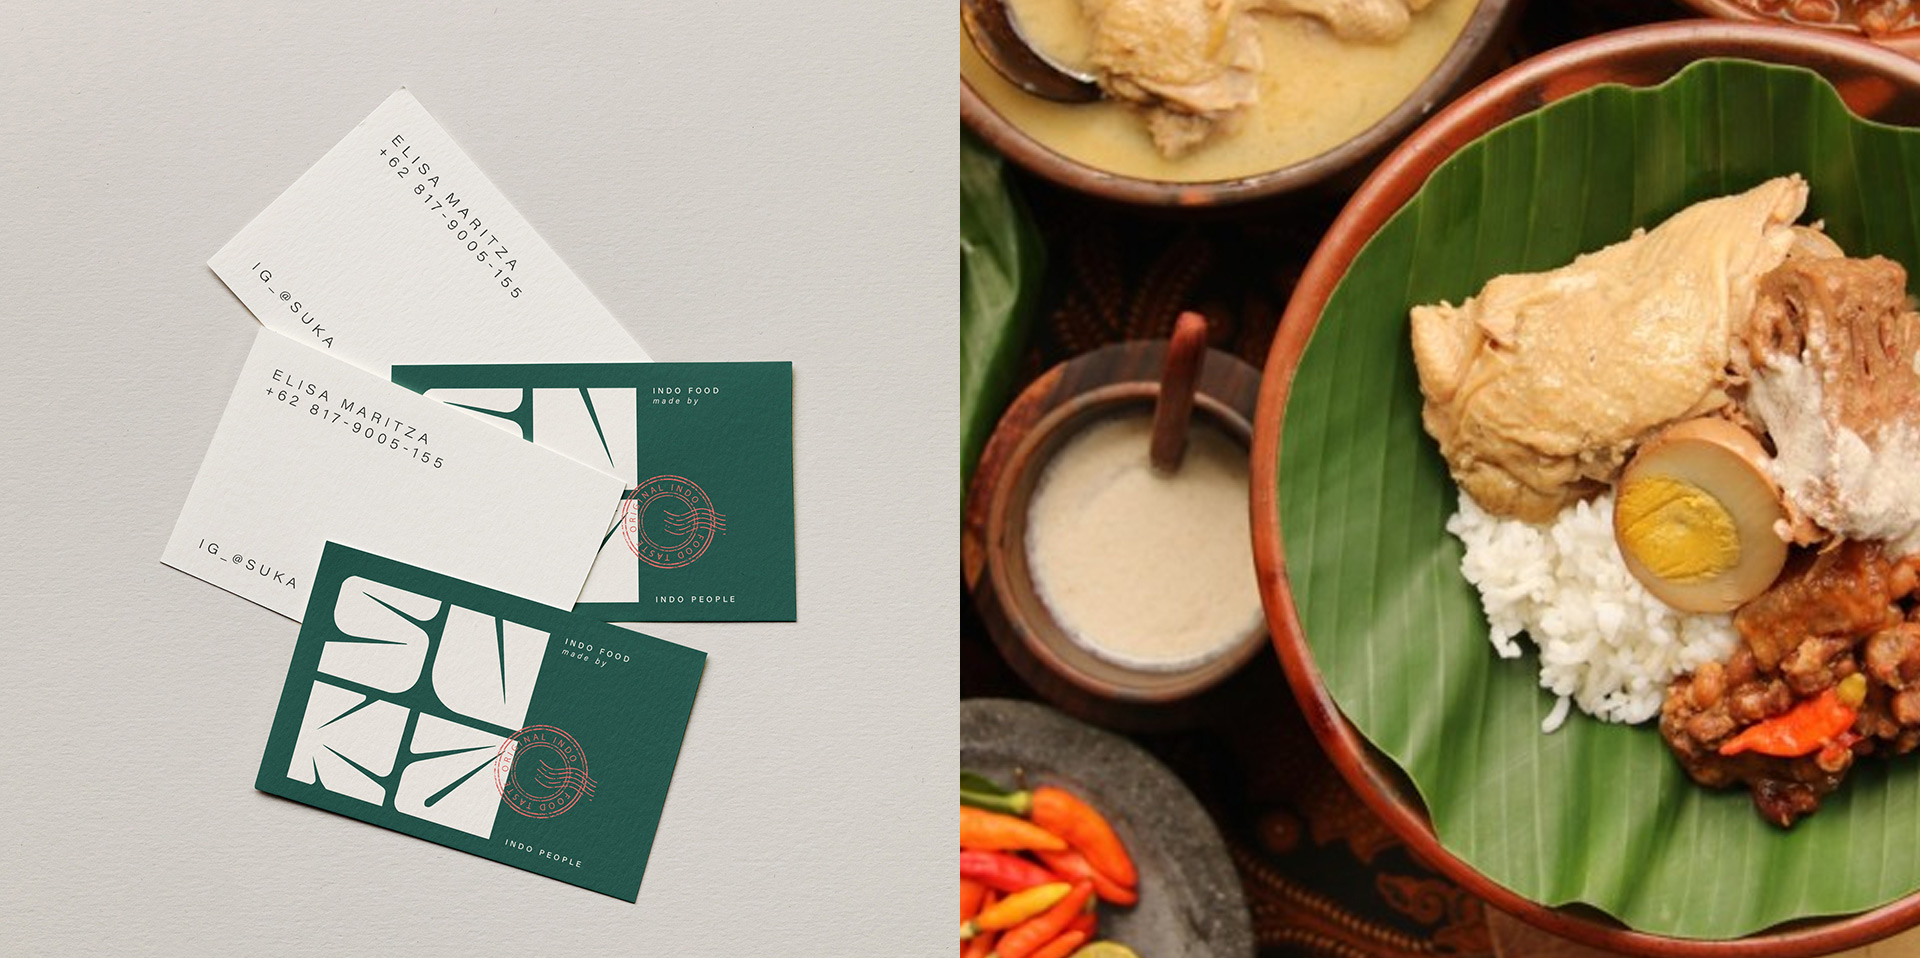 Suka Indoesian Food Identity Inspired by Banana Leaf